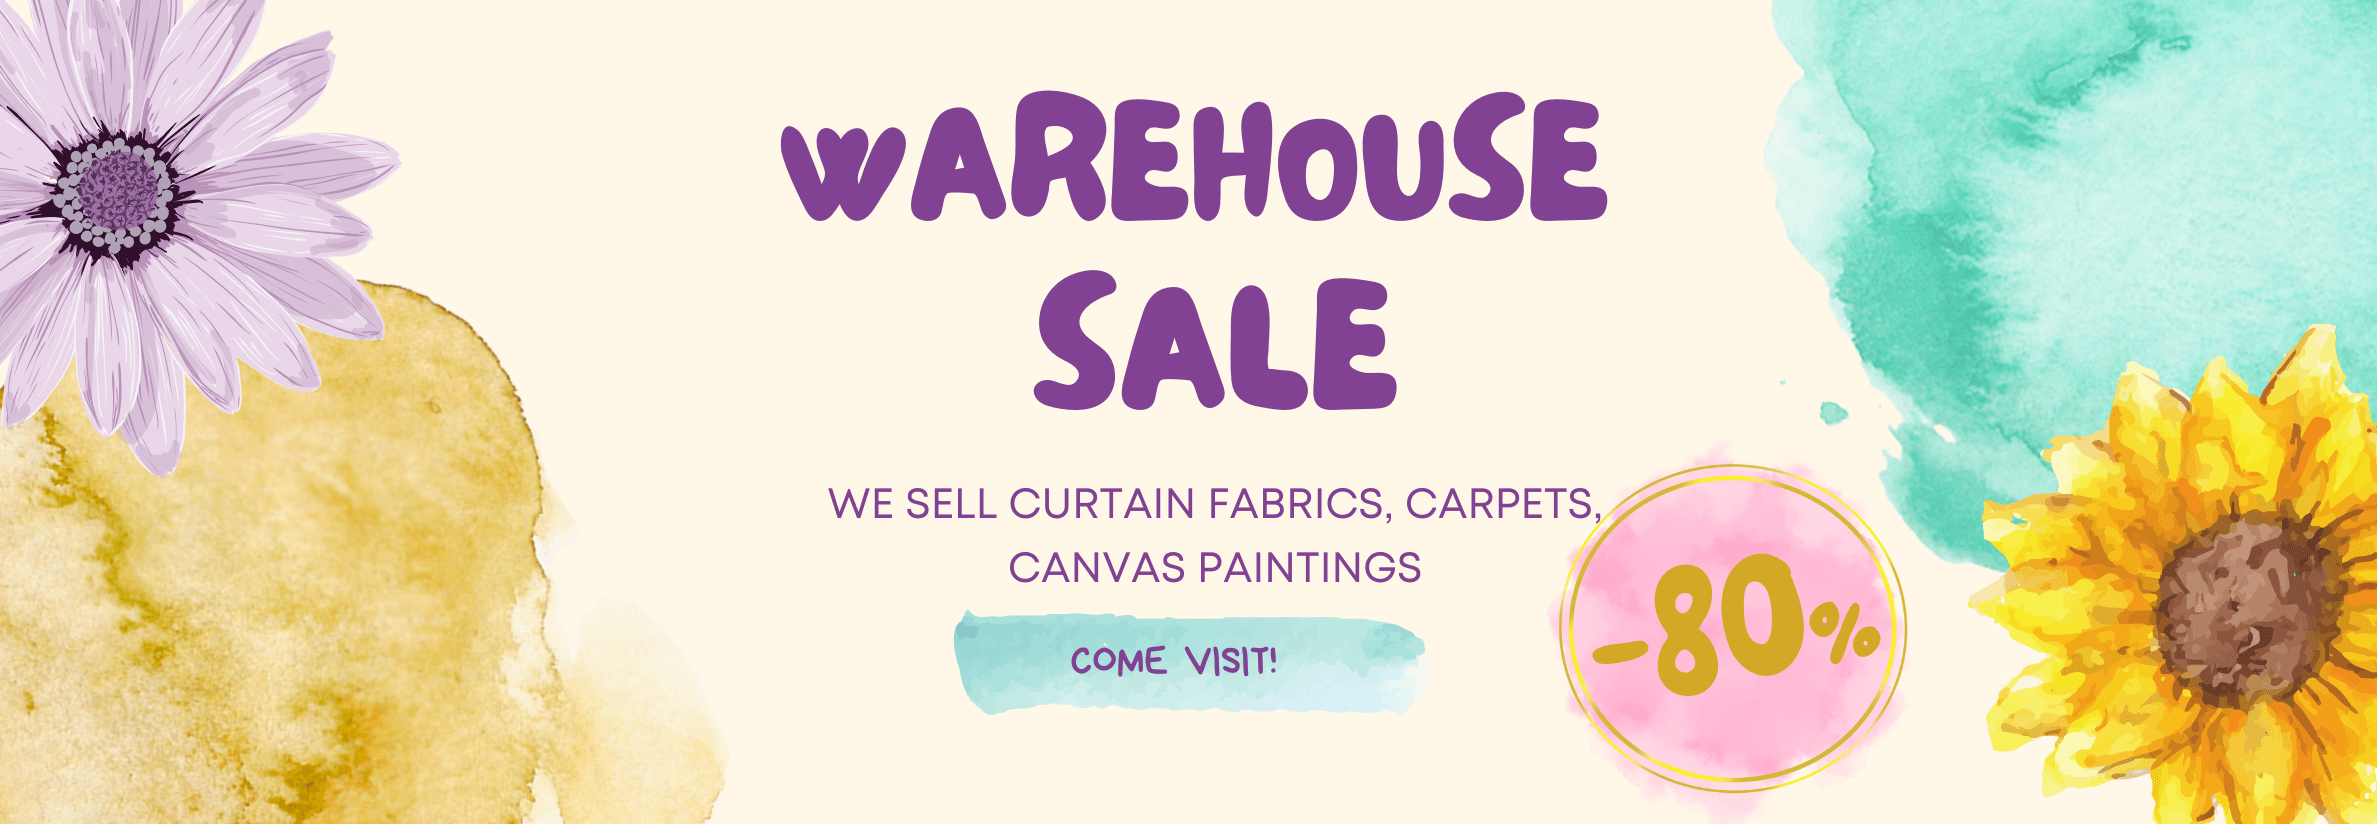 warehouse-sale